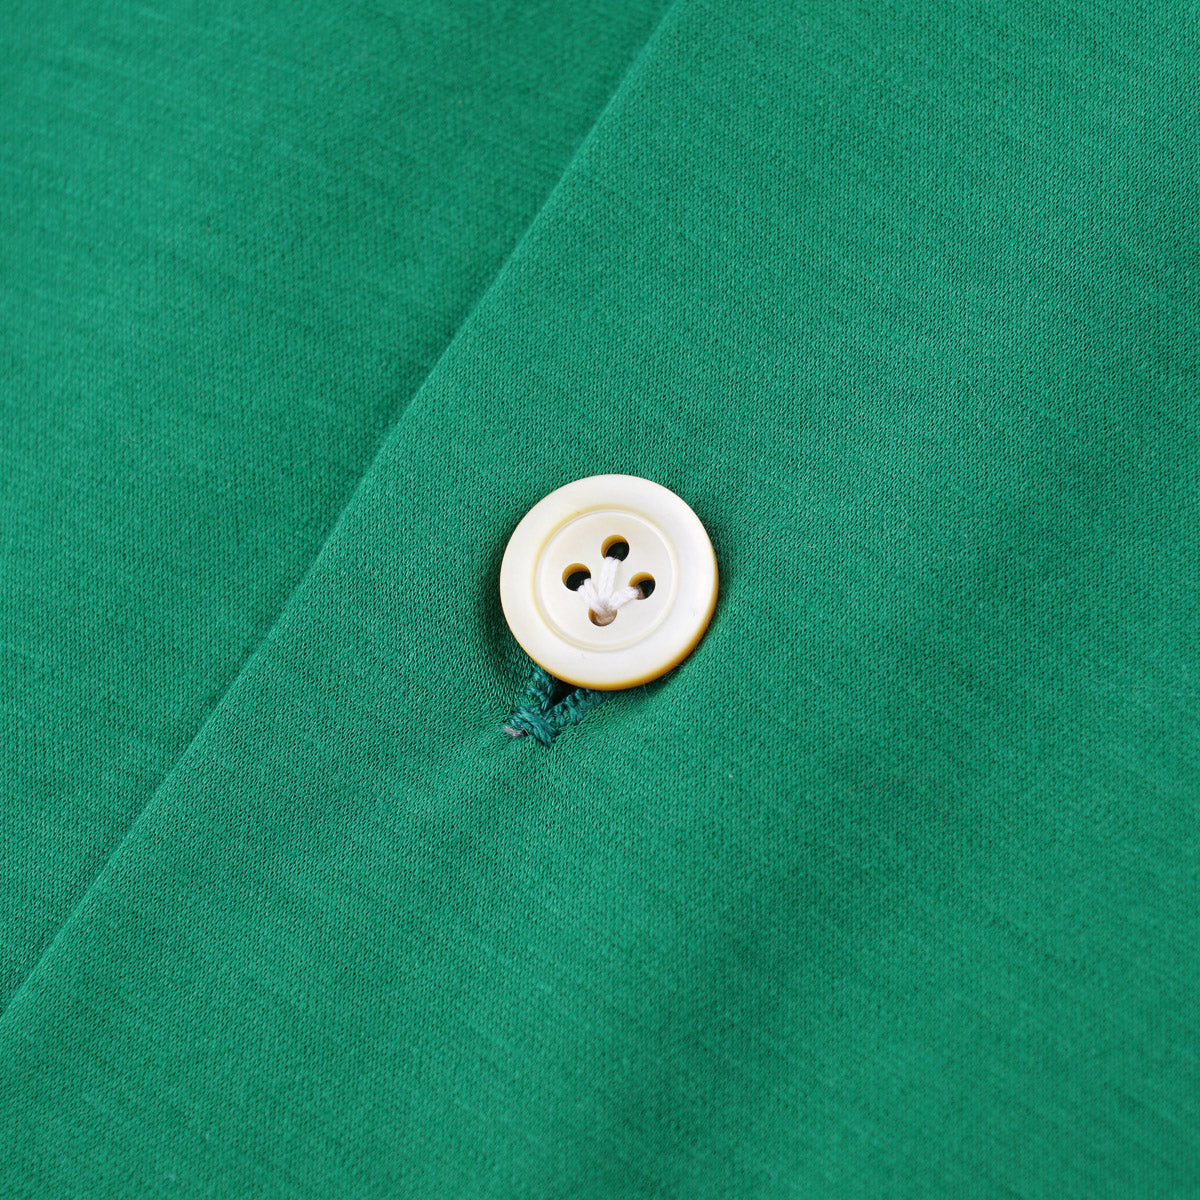 Kiton Superfine Jersey Cotton Shirt - Top Shelf Apparel